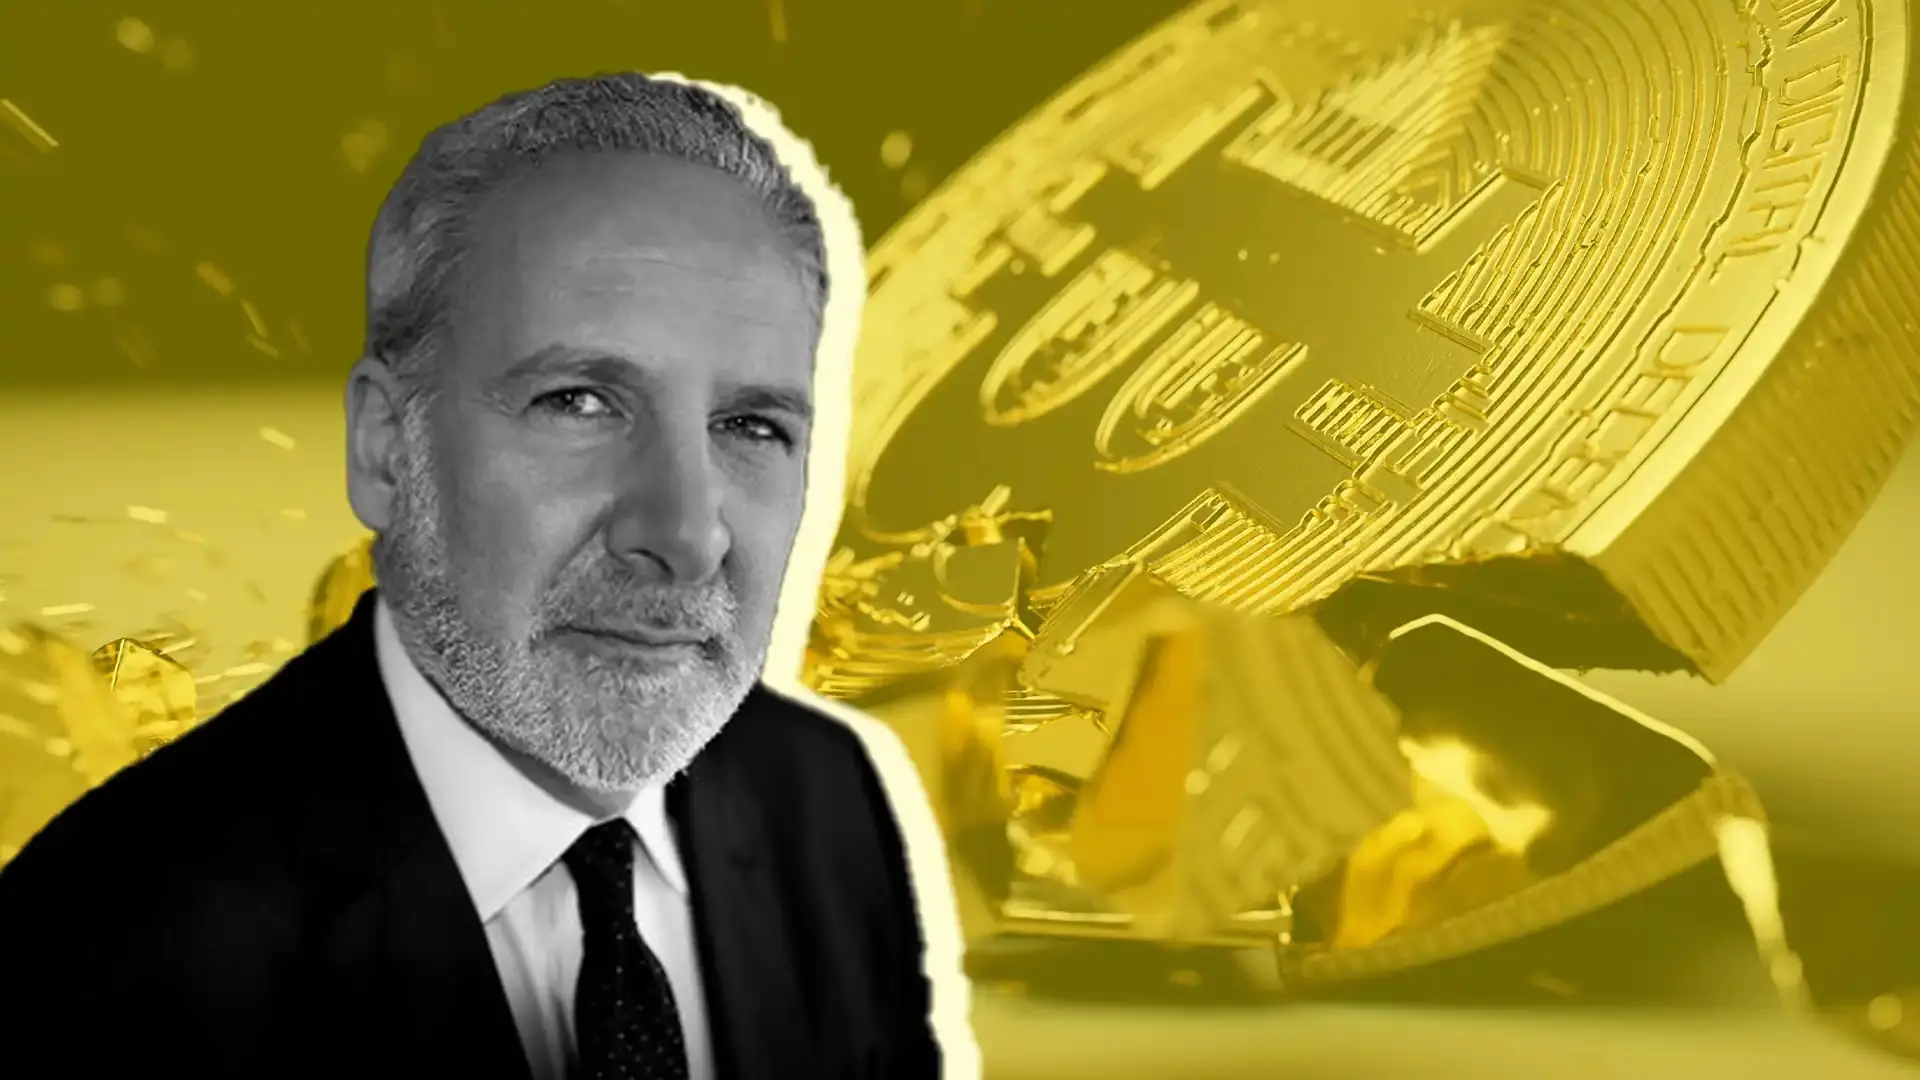 Peter Schiff predicts a sharp drop in bitcoin